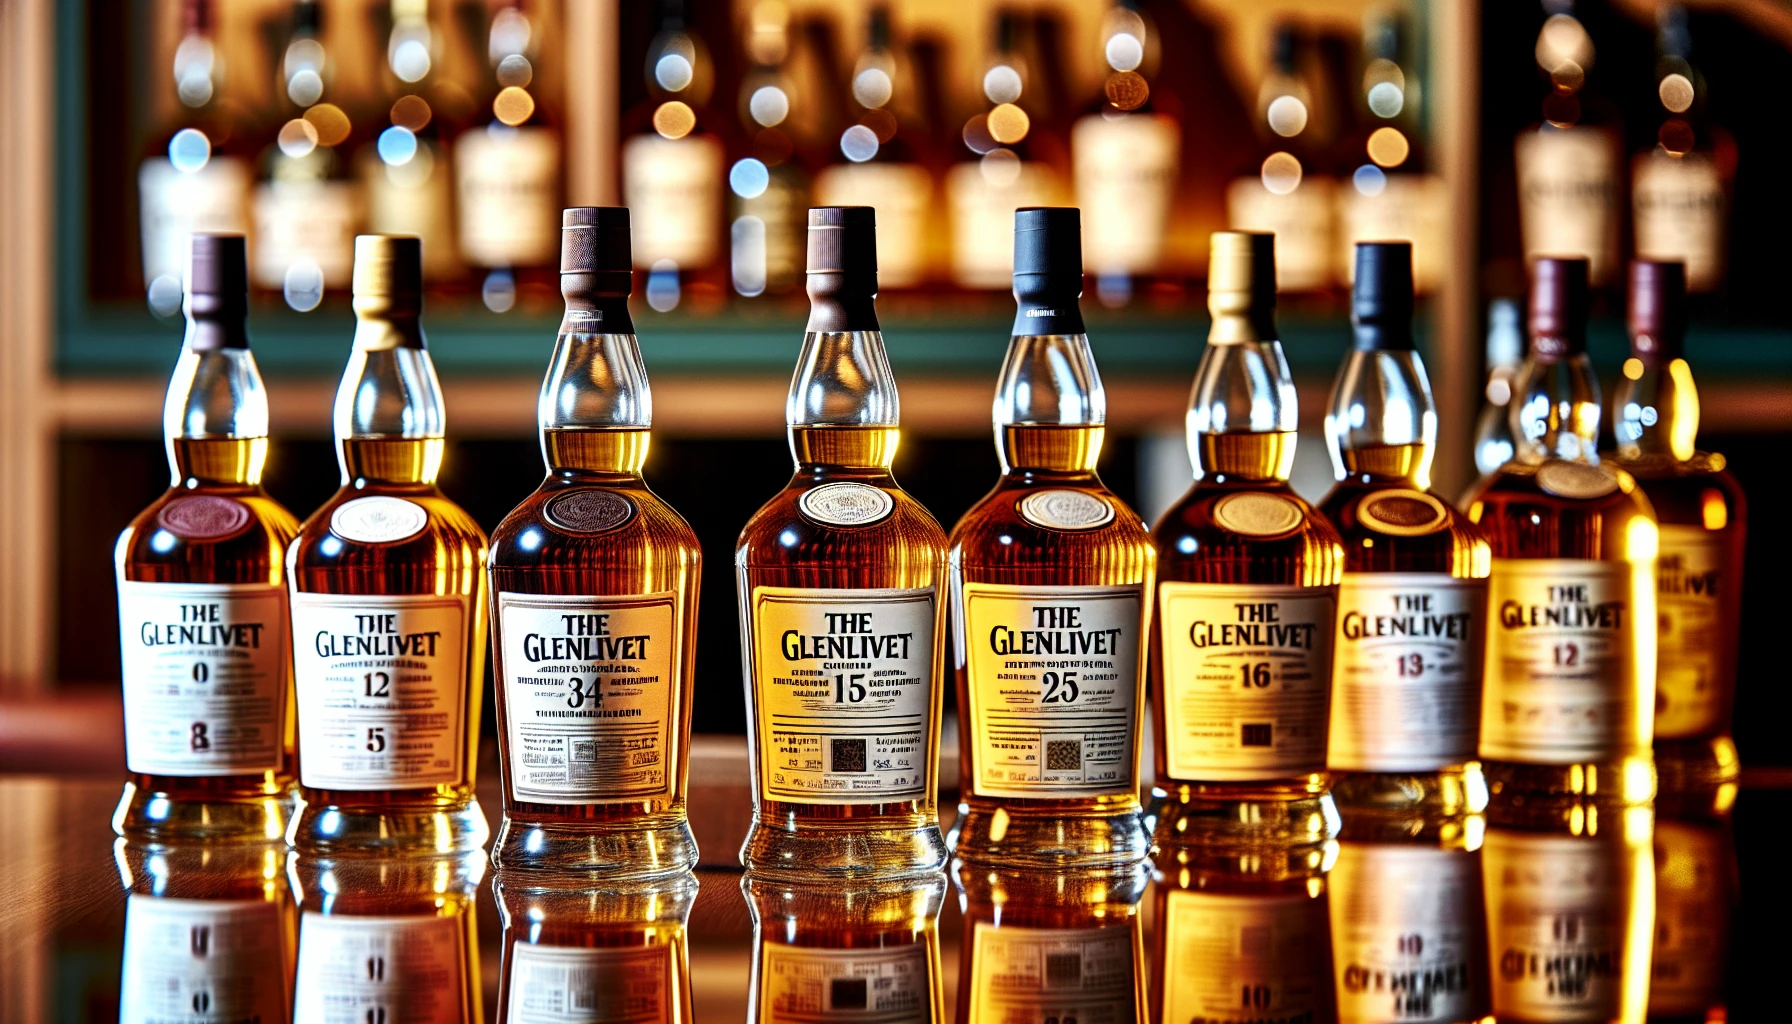 Bottles of The Glenlivet's finest selection of single malt Scotch whiskies